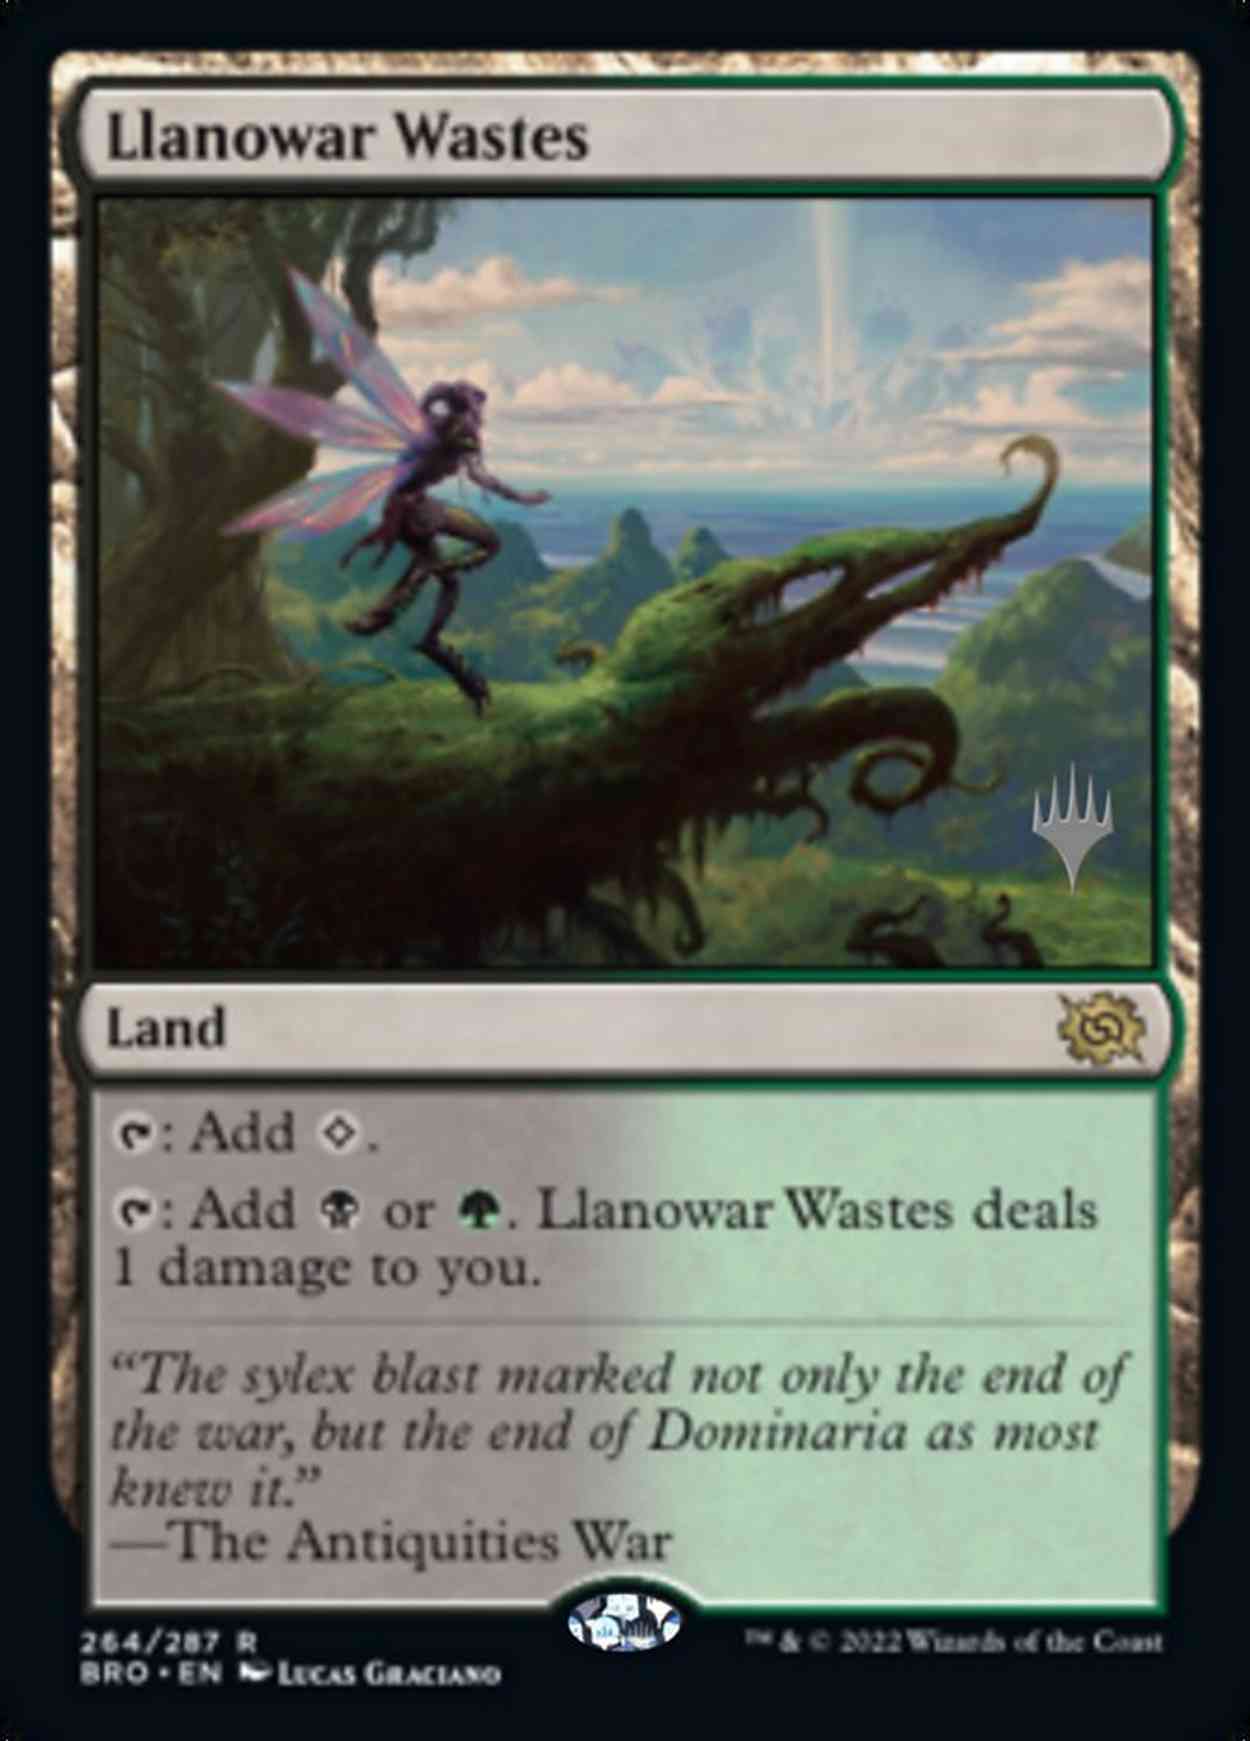 Llanowar Wastes magic card front